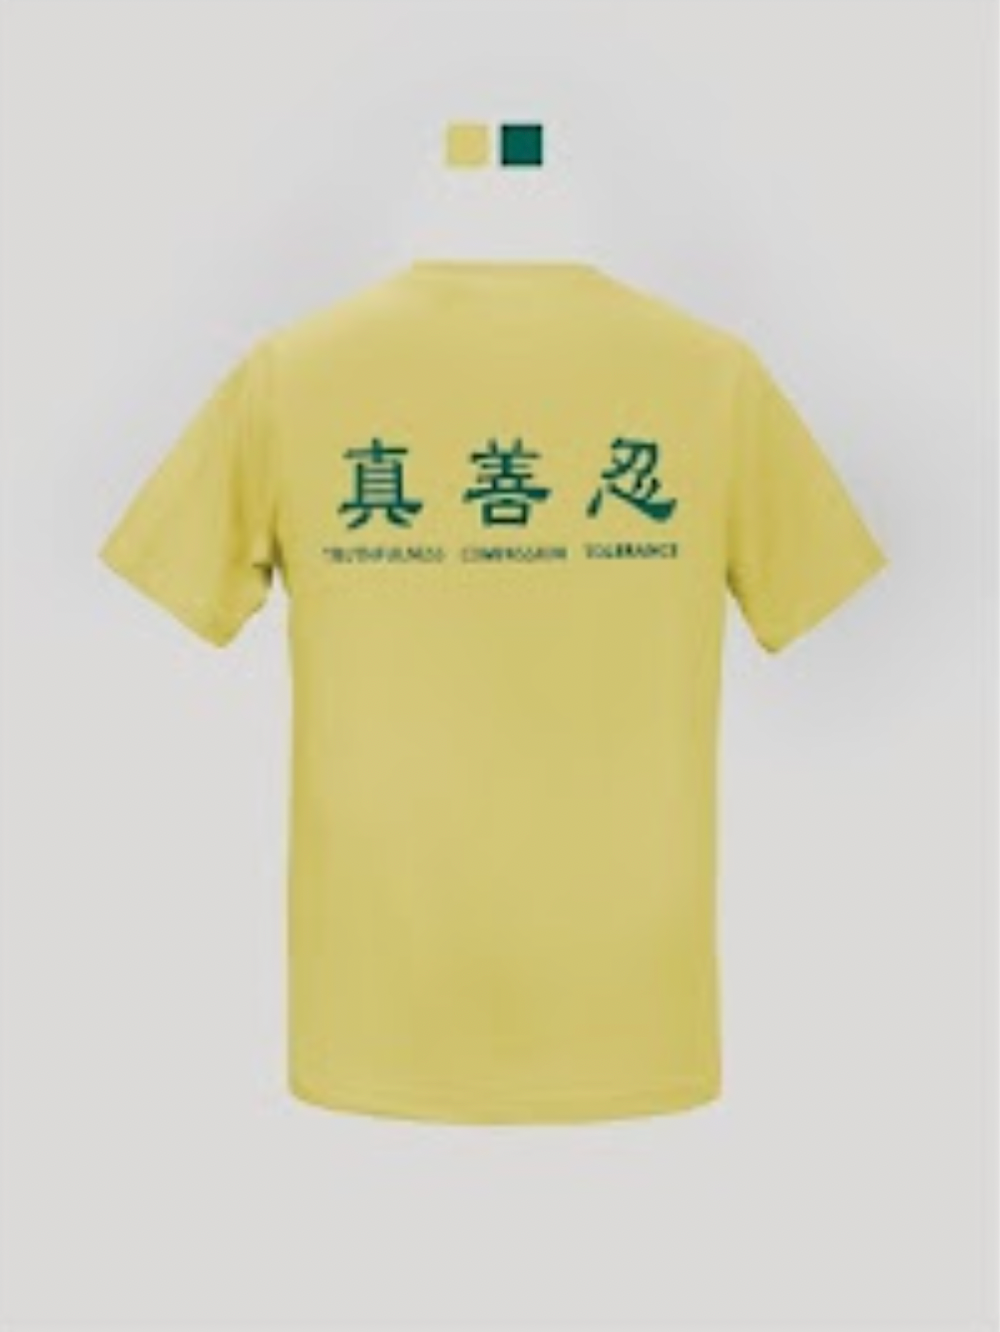 Truthfulness, Compassion, Tolerance T-Shirt with Shen Yun Dancer Logo